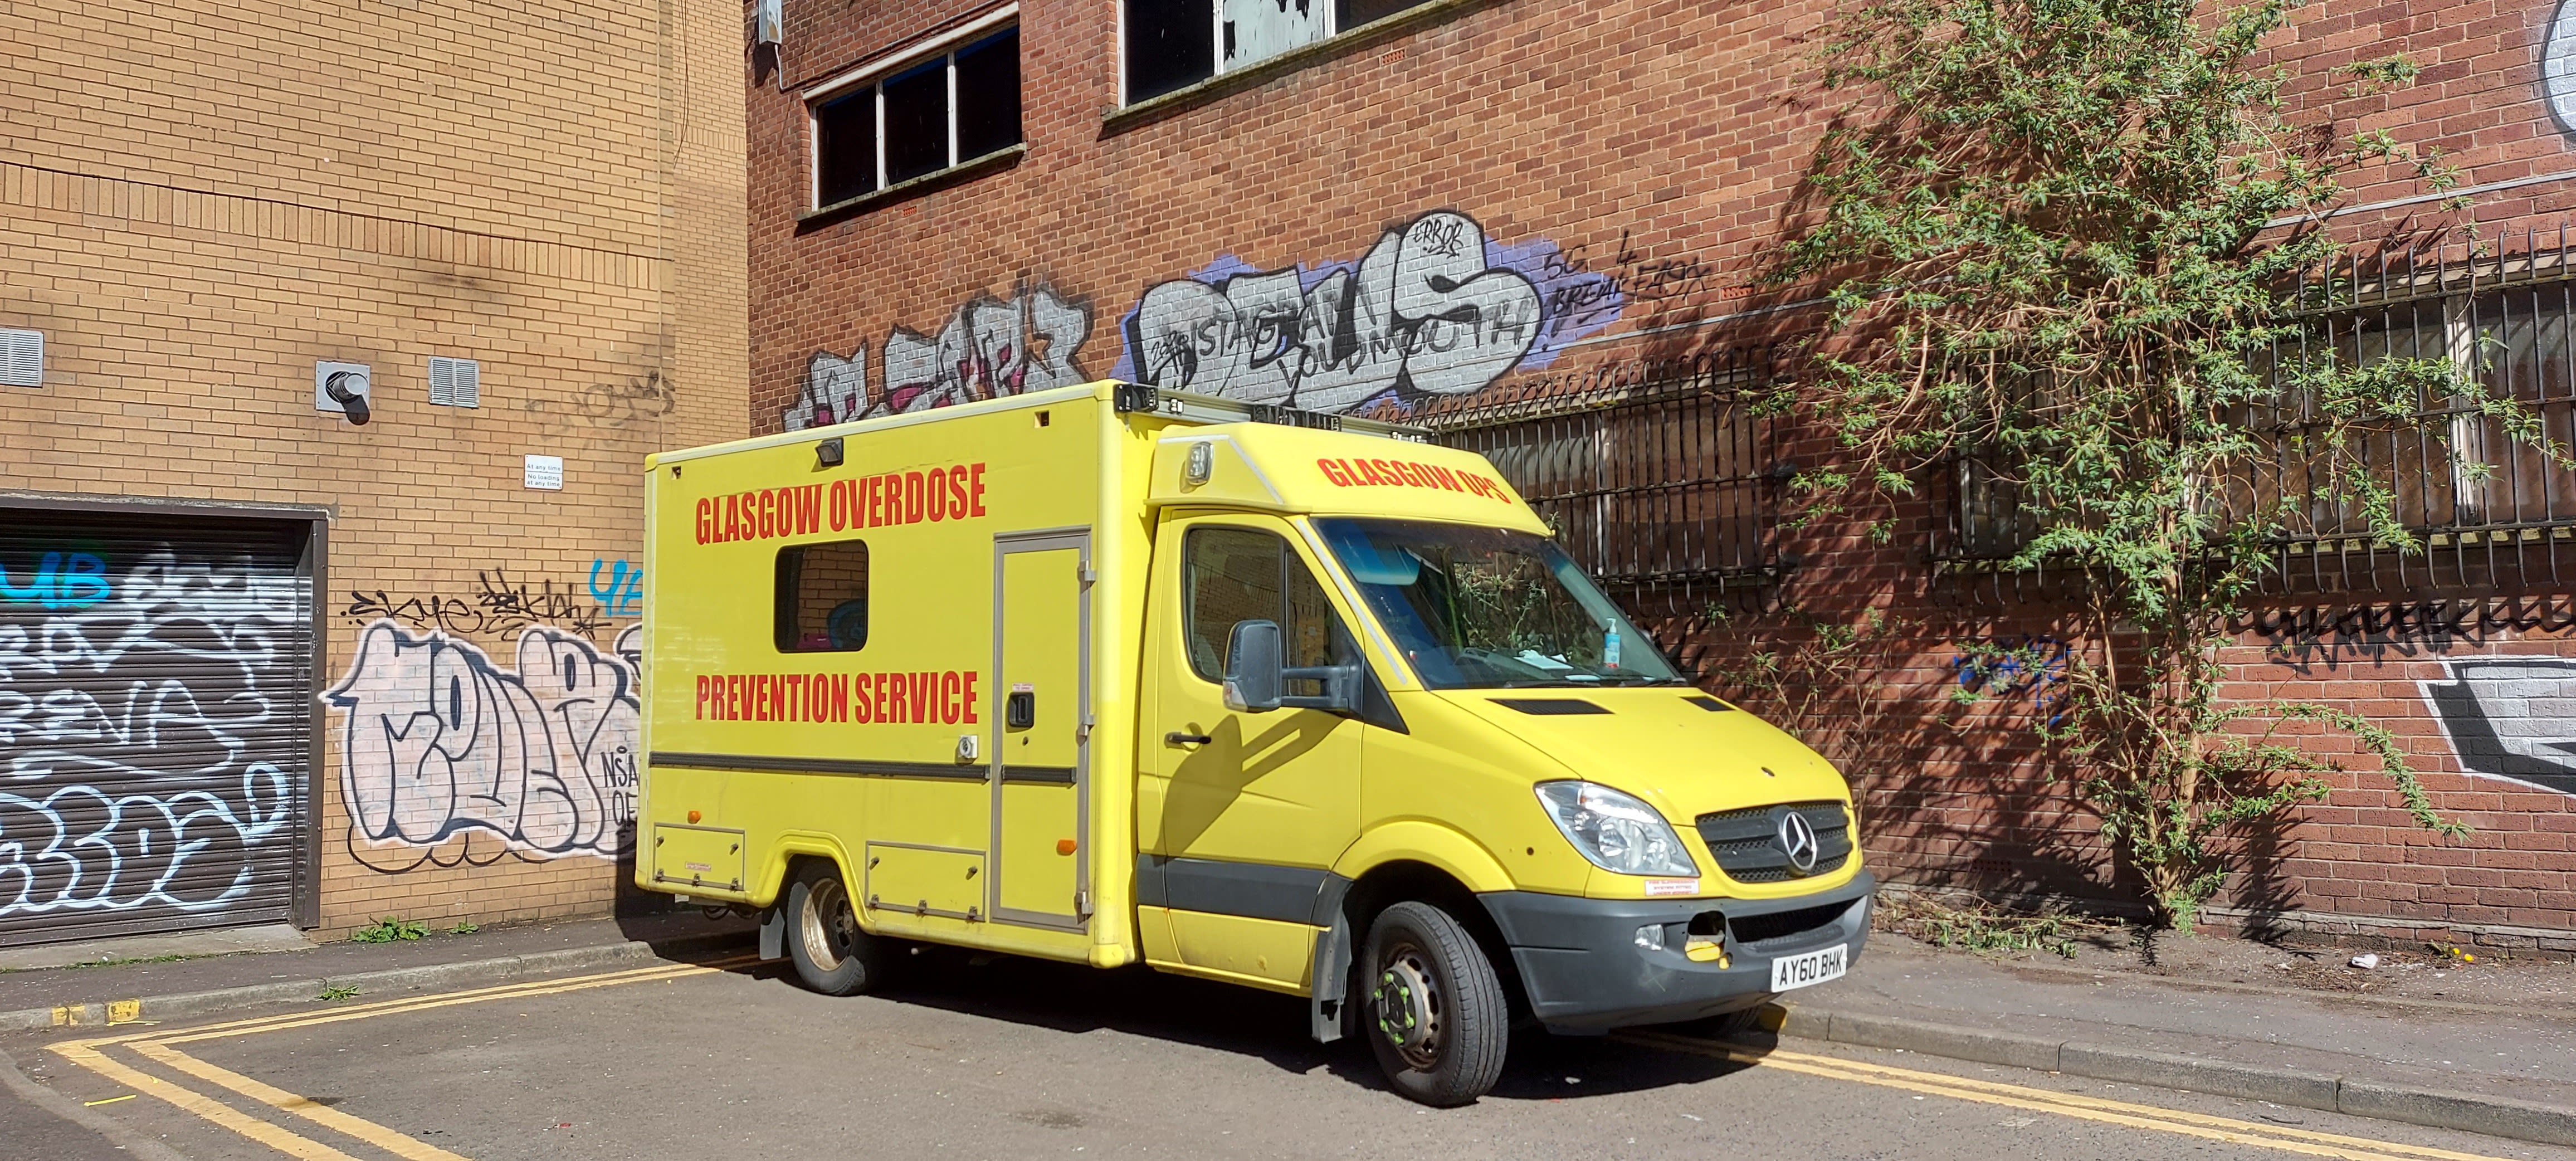 Peter Krykant's overdose prevention service van in Glasgow